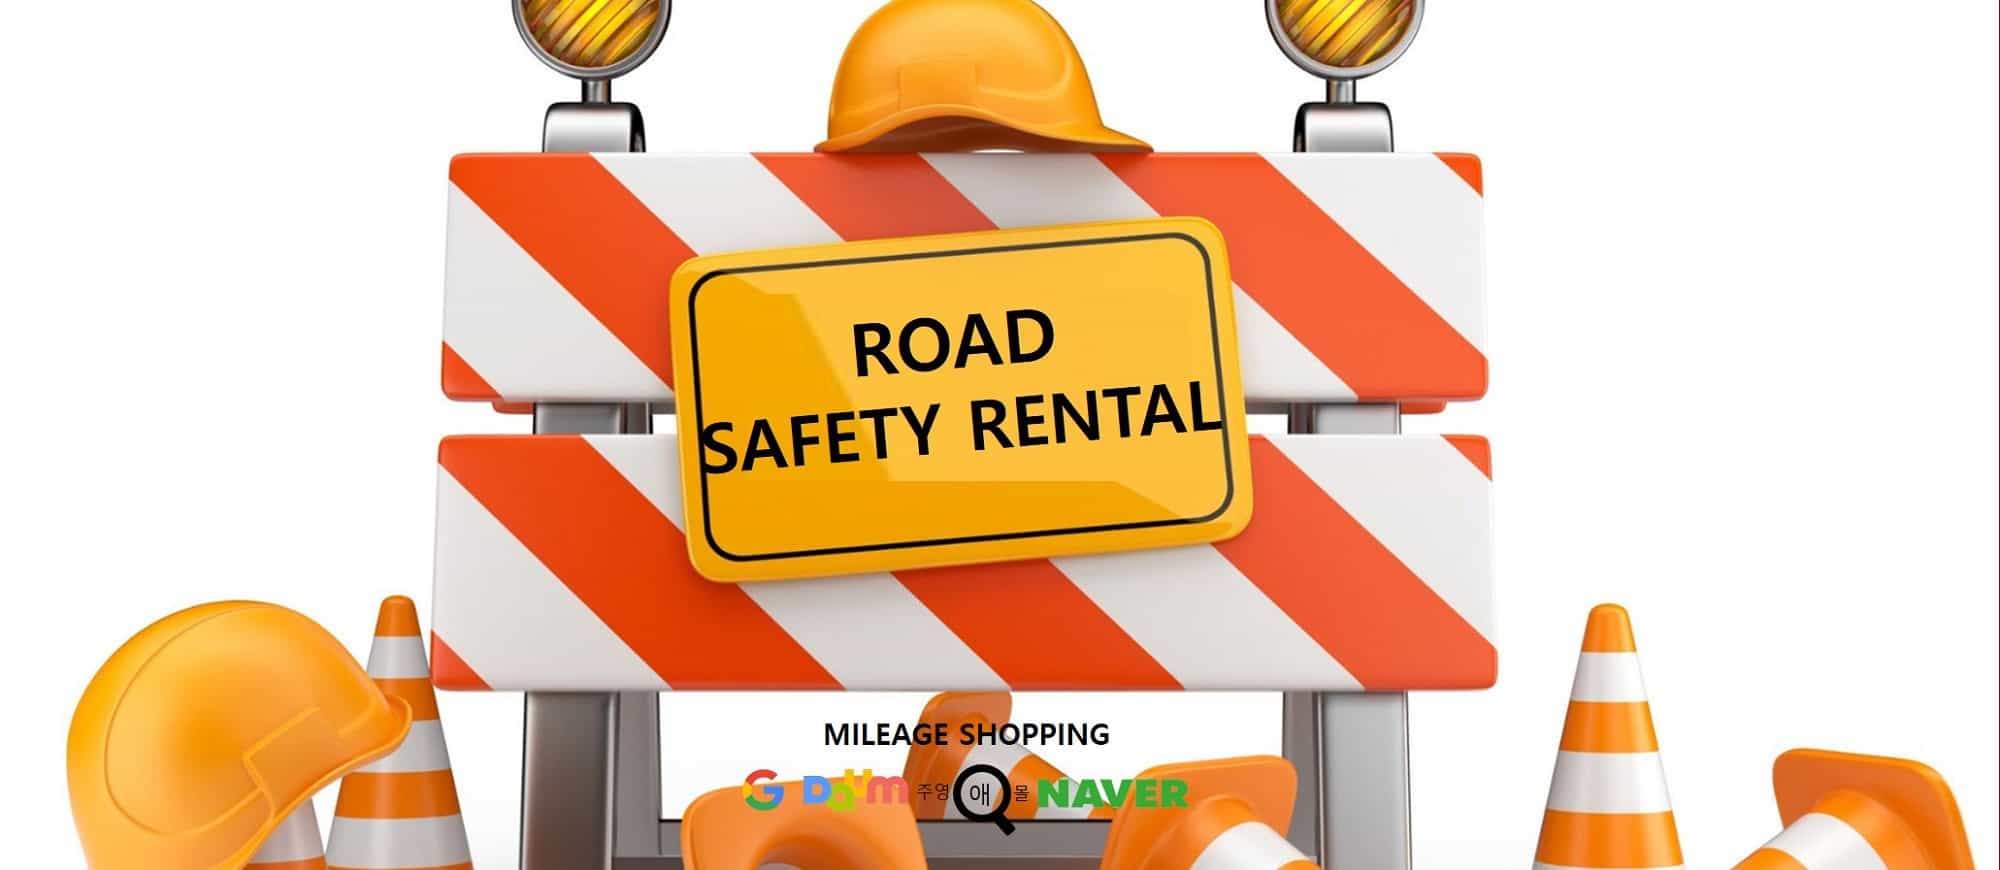 ROAD SAFETY RENTAL